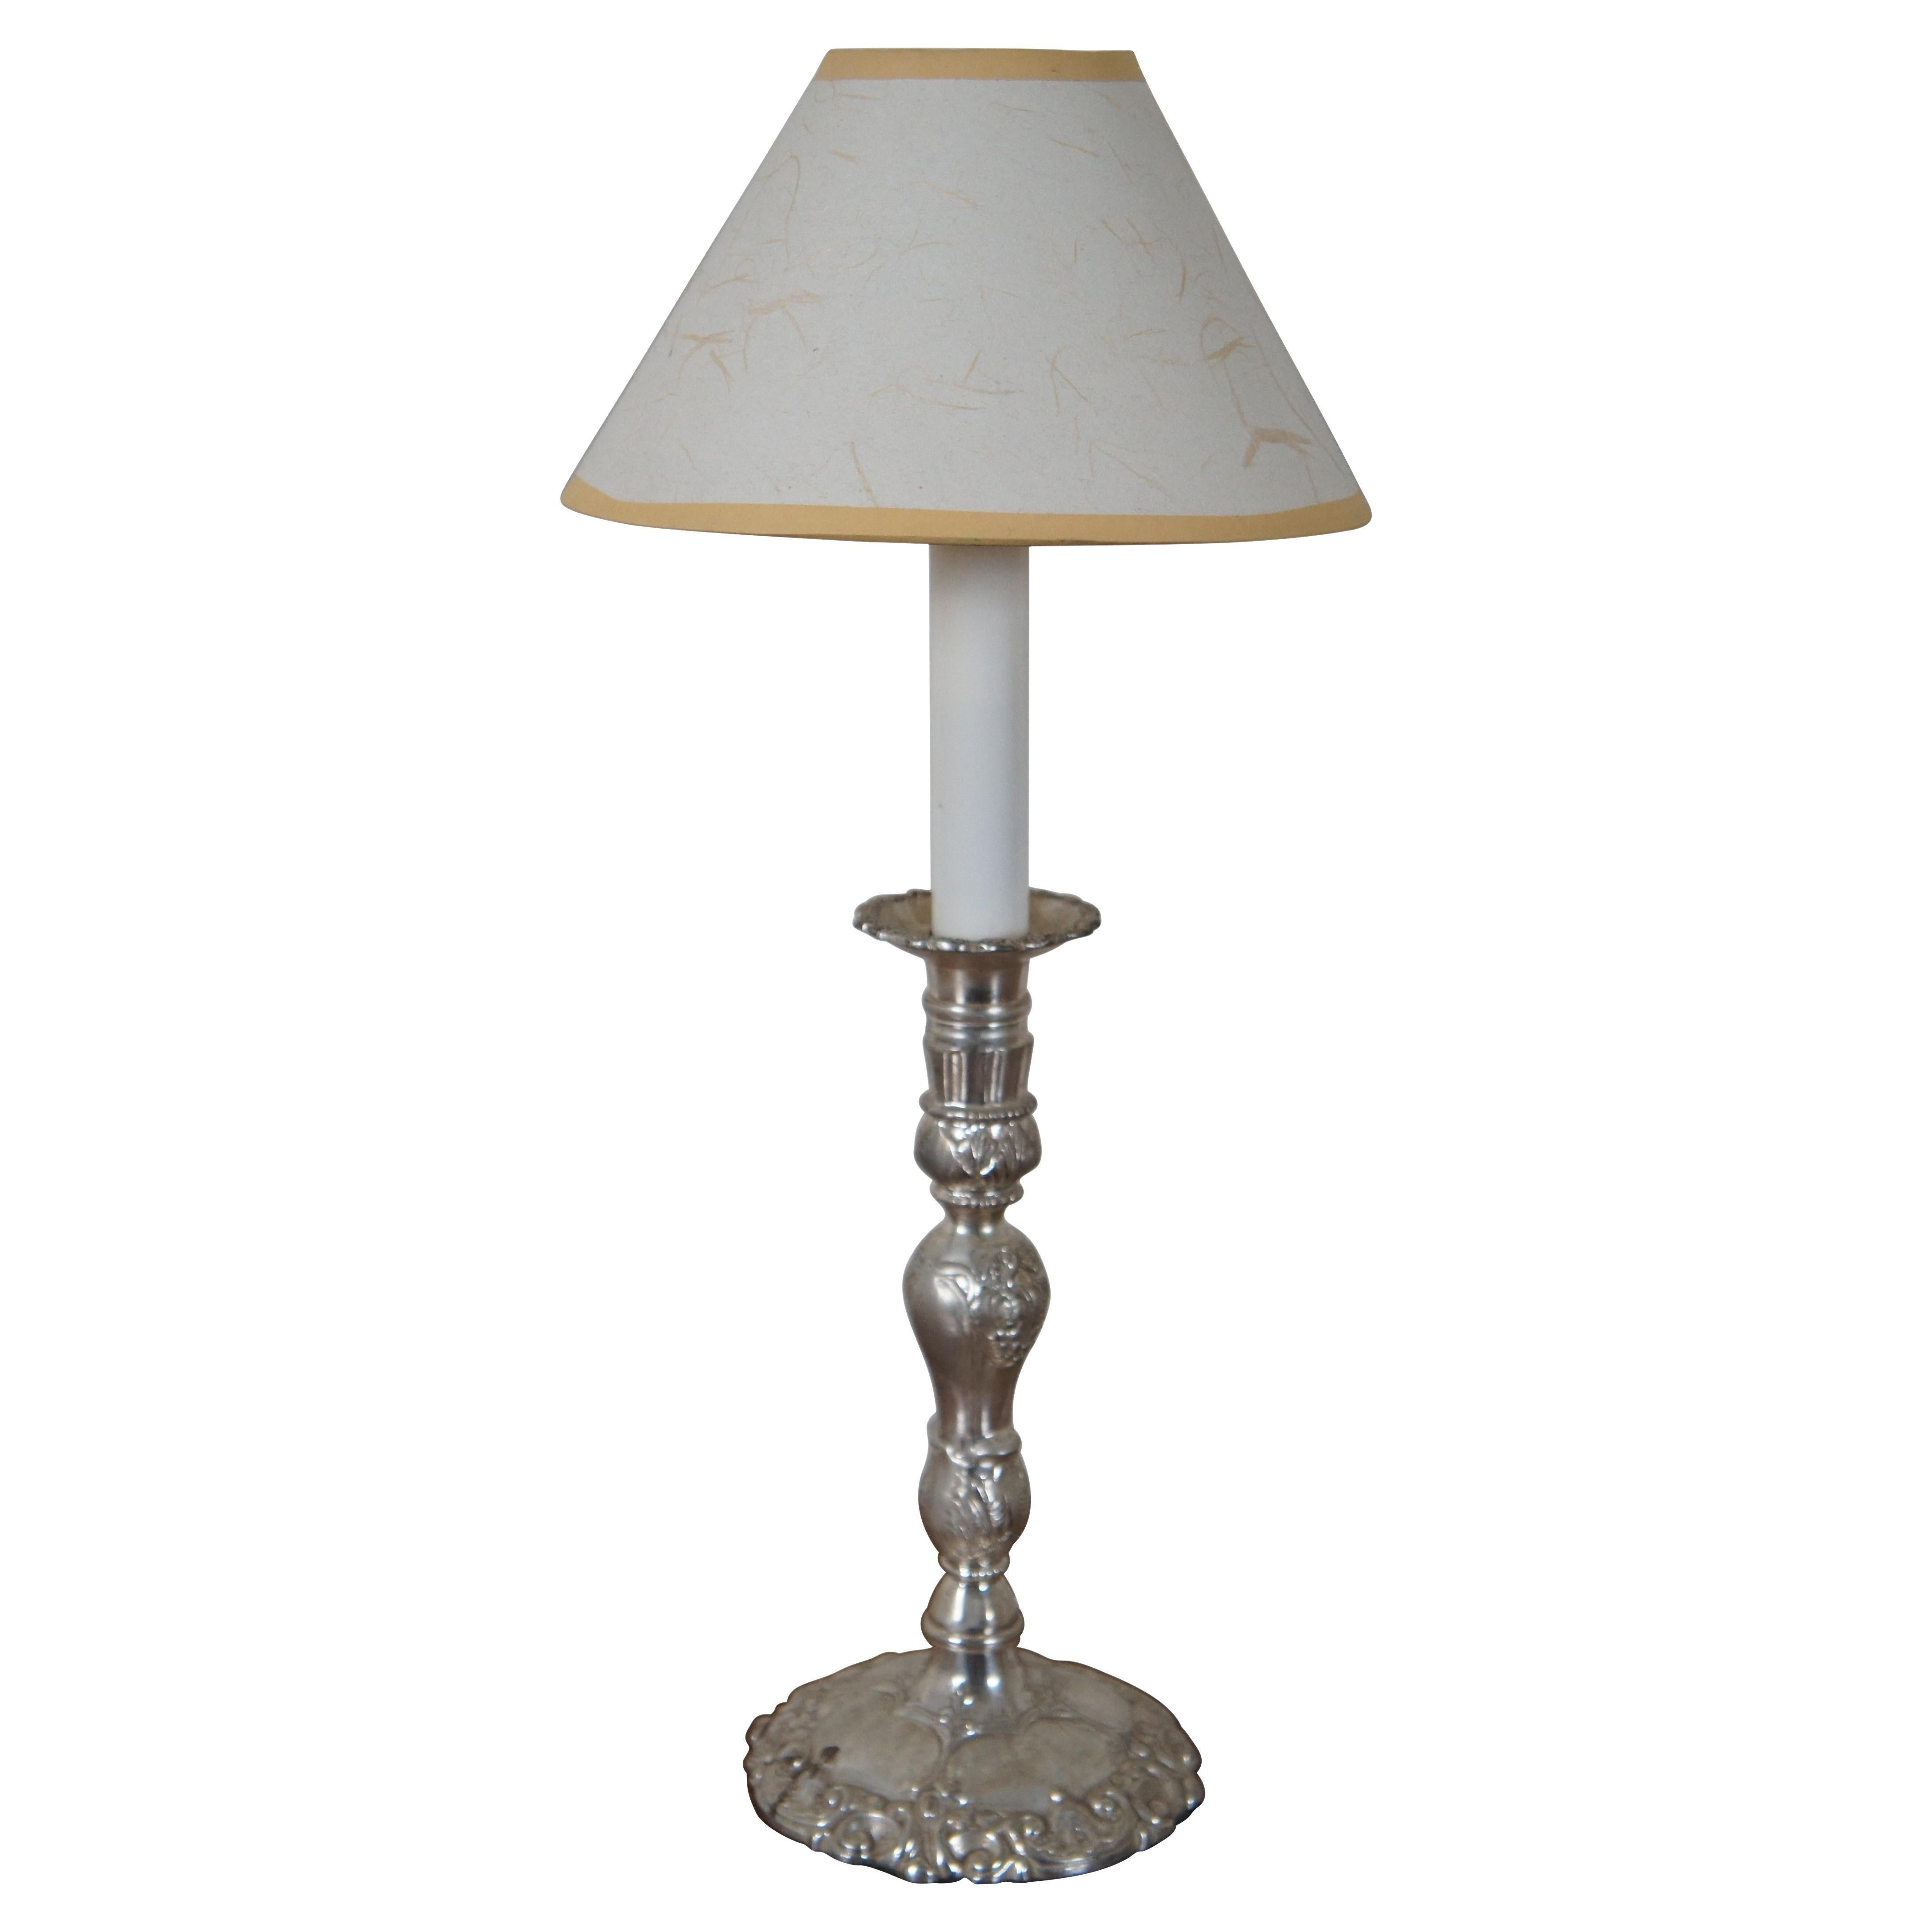 Lampe de bureau néoclassique ancienne en métal argenté converti en bougeoir, lampe de bureau